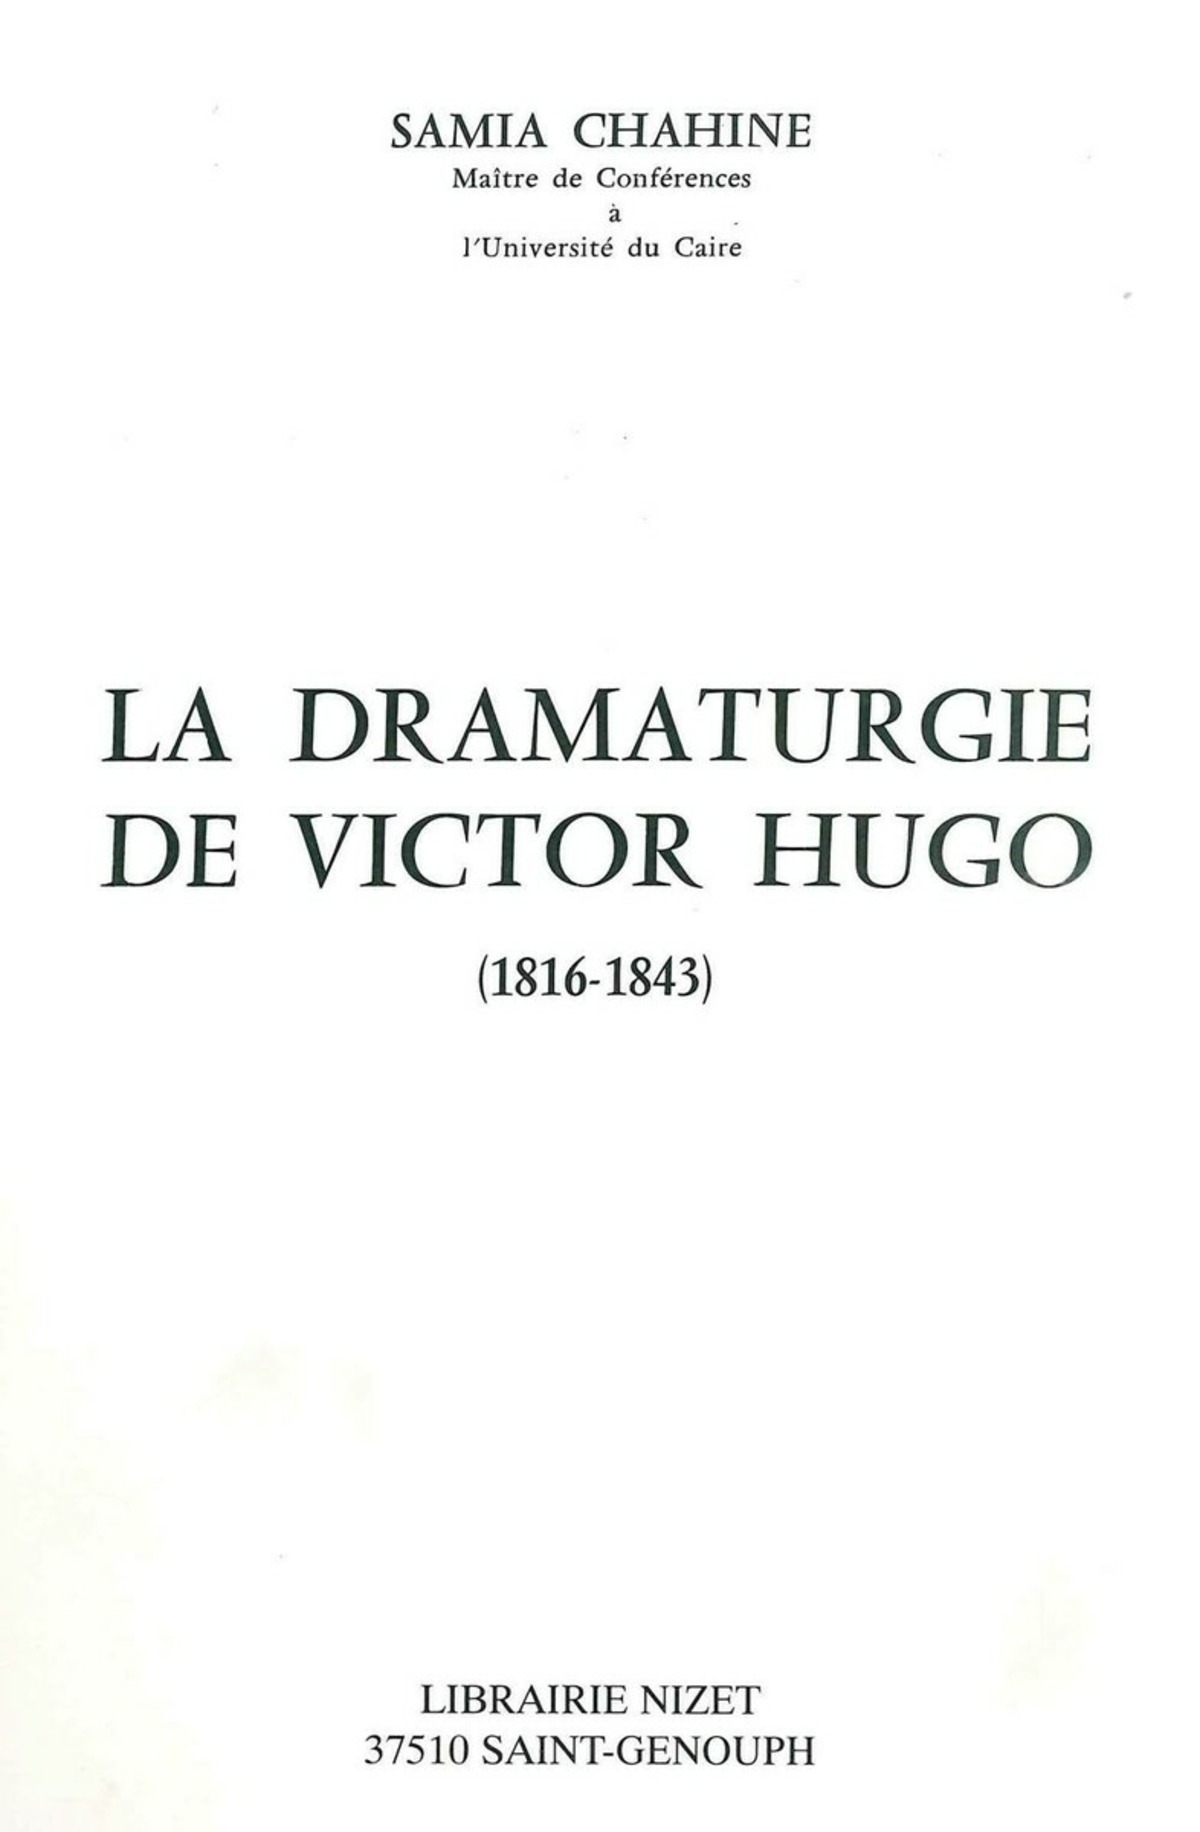 La Dramaturgie de Victor Hugo (1816-1843)